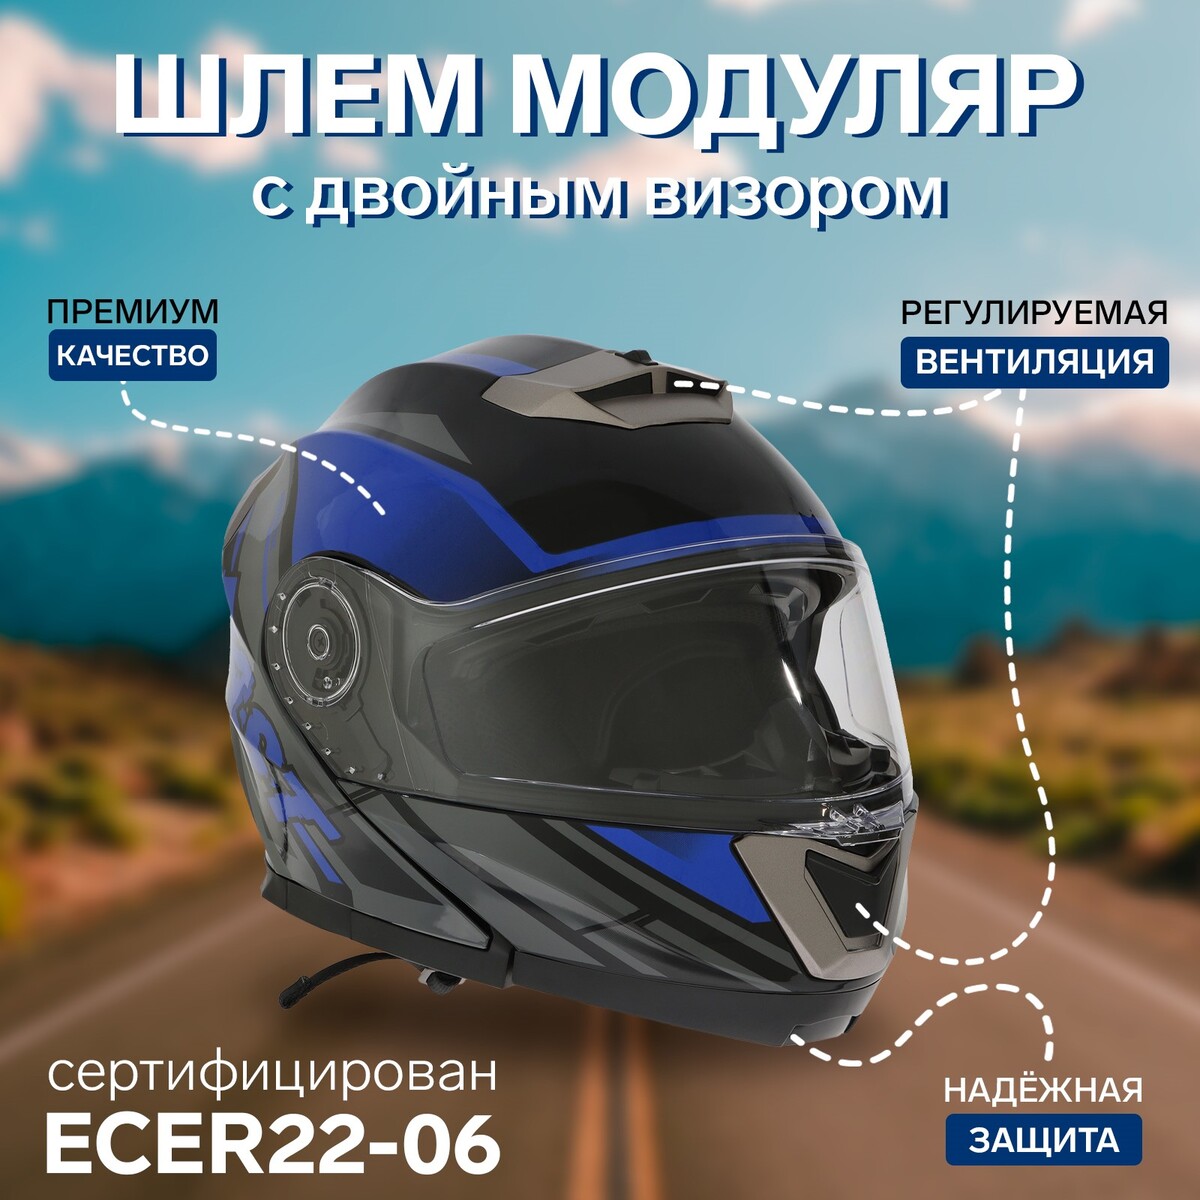 Шлем модуляр с двумя визорами, размер l (59-60), модель - bld-160e, черно-синий шлем rollo pro защитный велосипедный синий